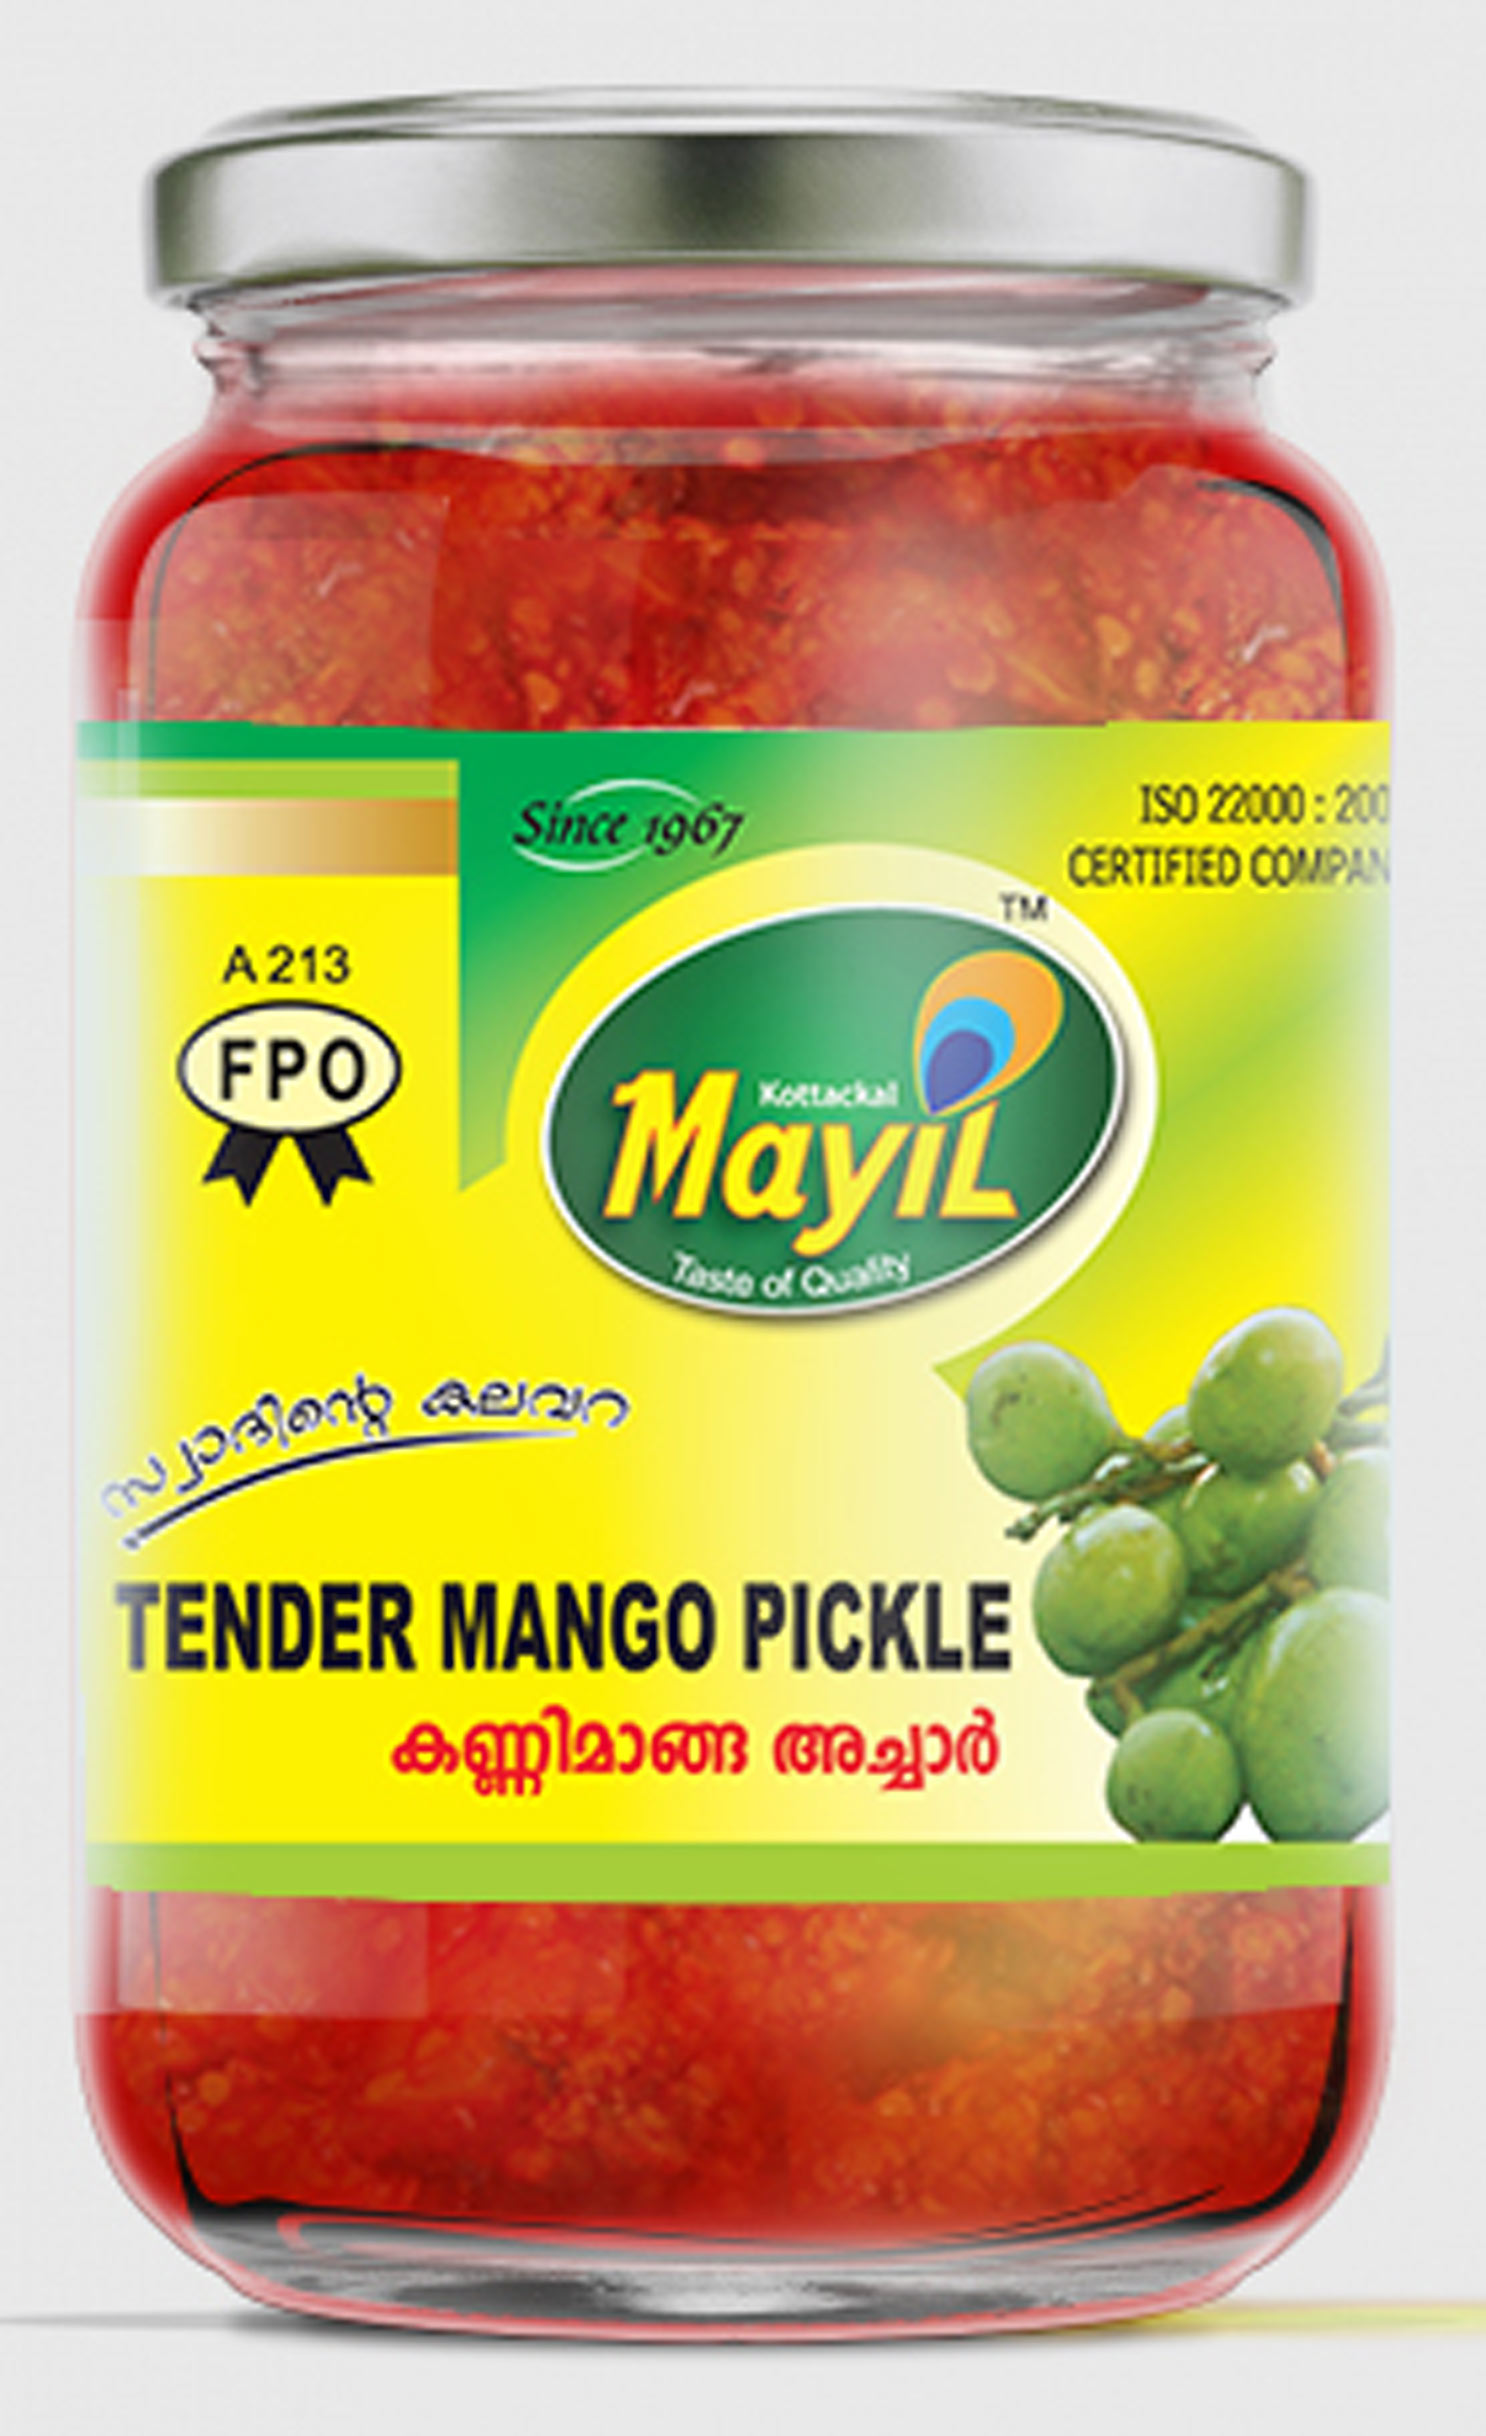 mayil products